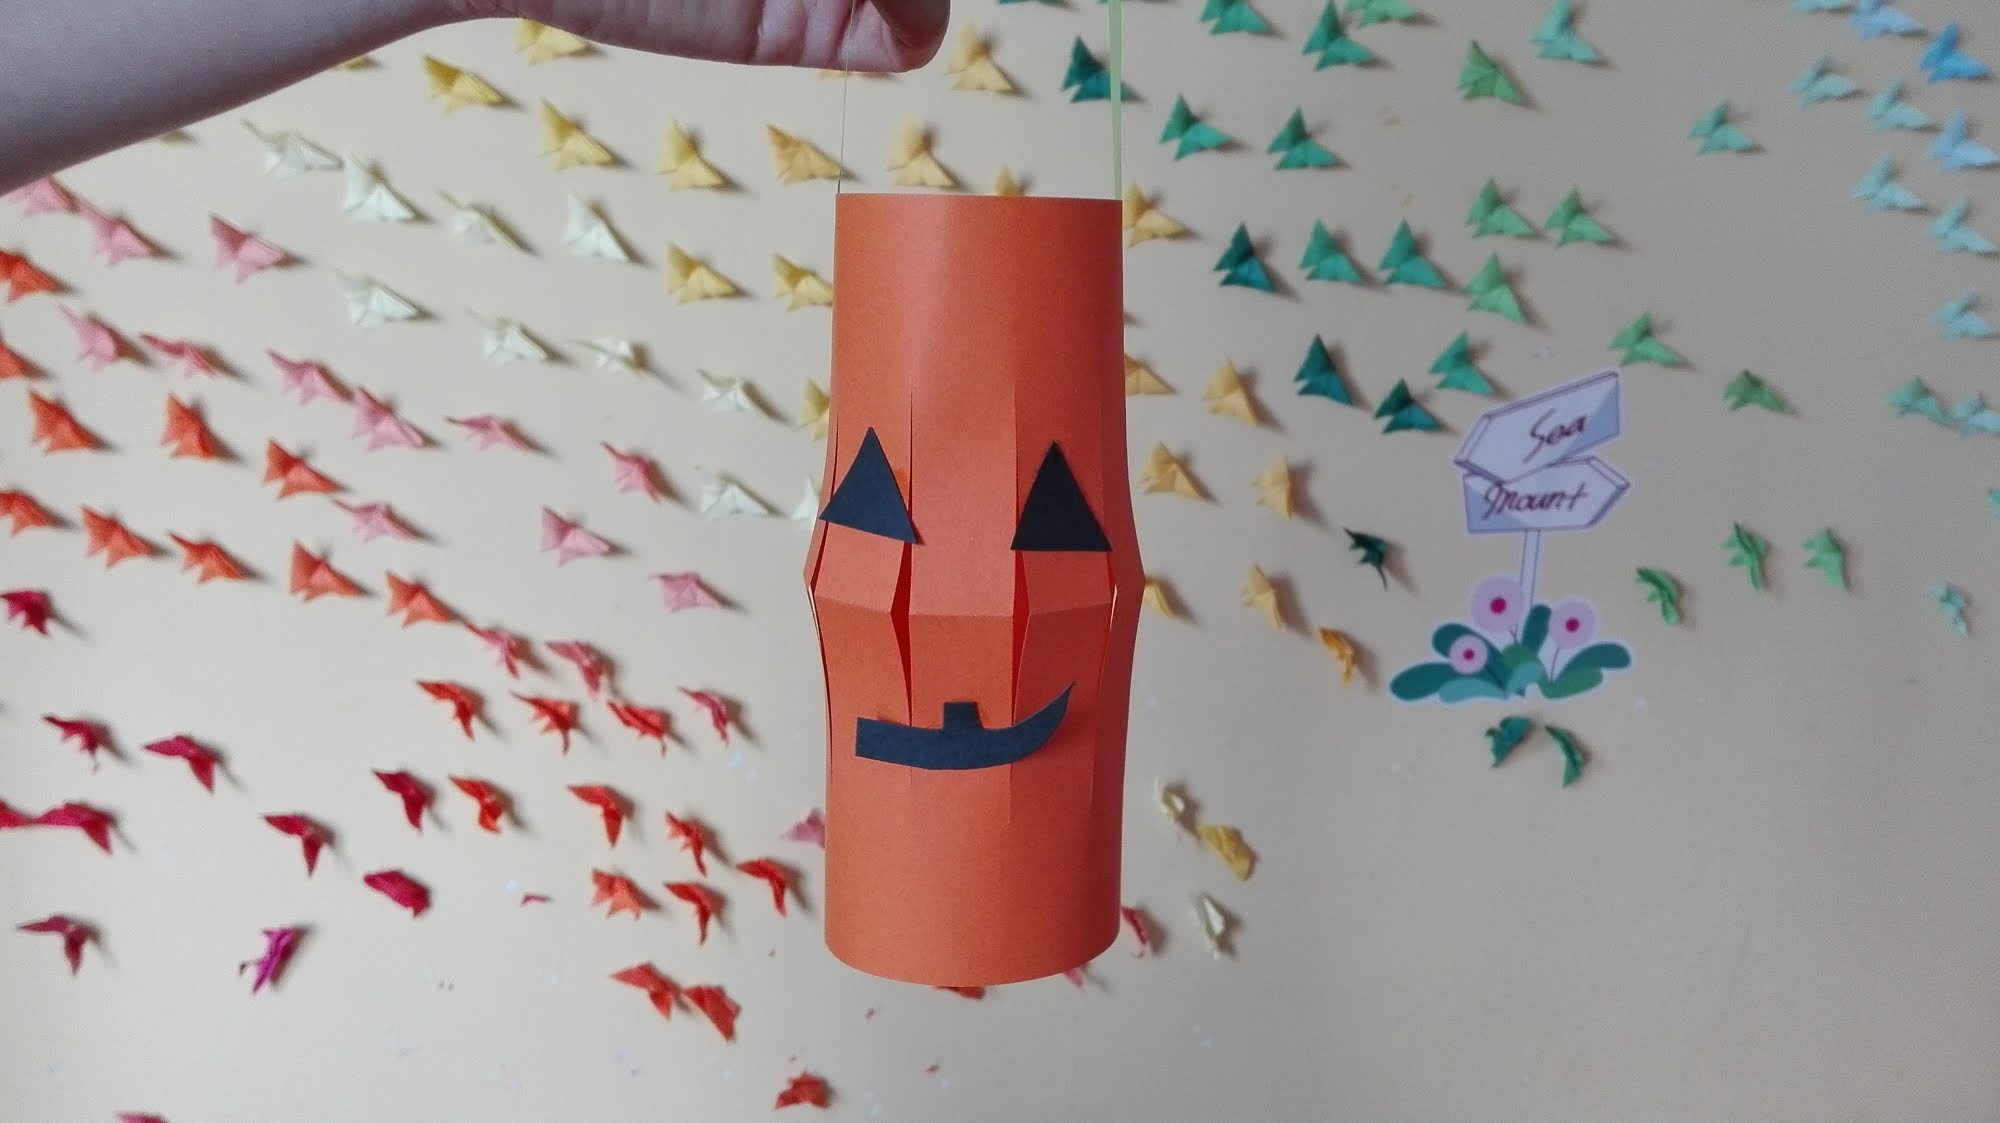 Jak zrobić Dyniowy Lampion z Papieru. How to make a Paper Pumpkin Lantern